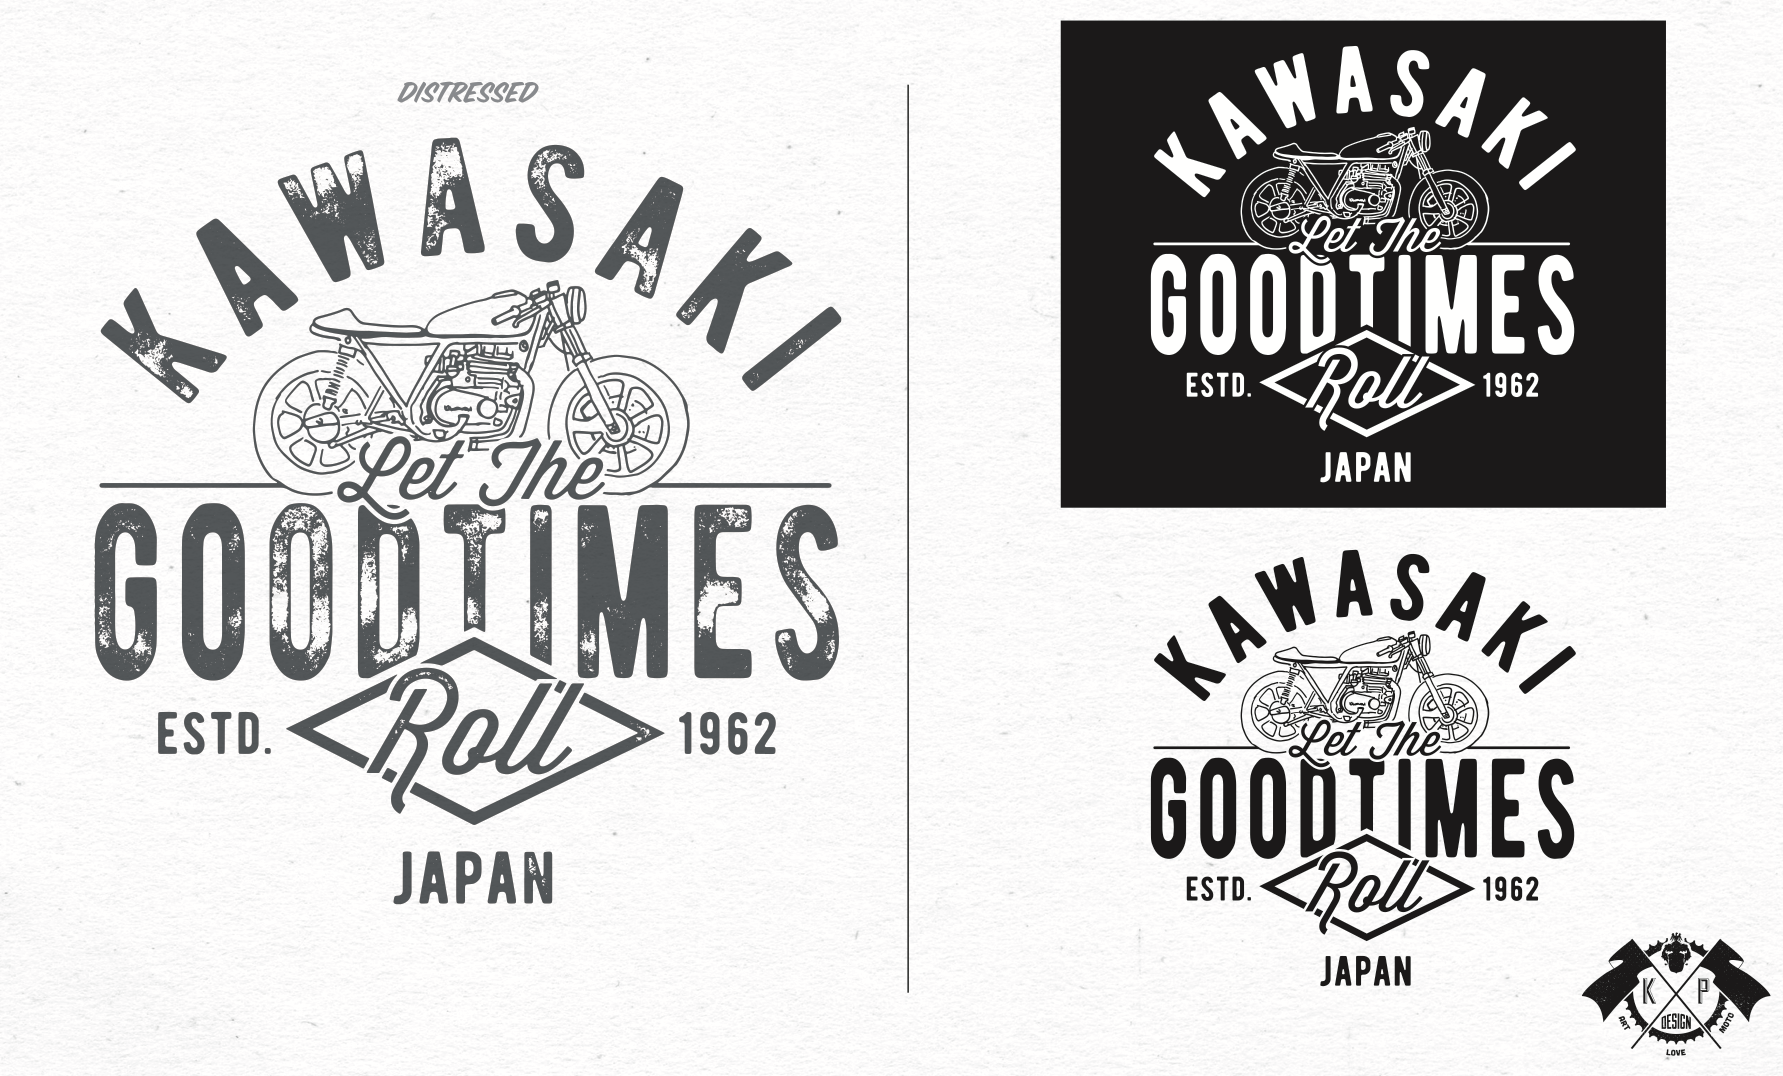 KP DESIGN : ART MOTO - Let The Good Times Roll: Kawasaki